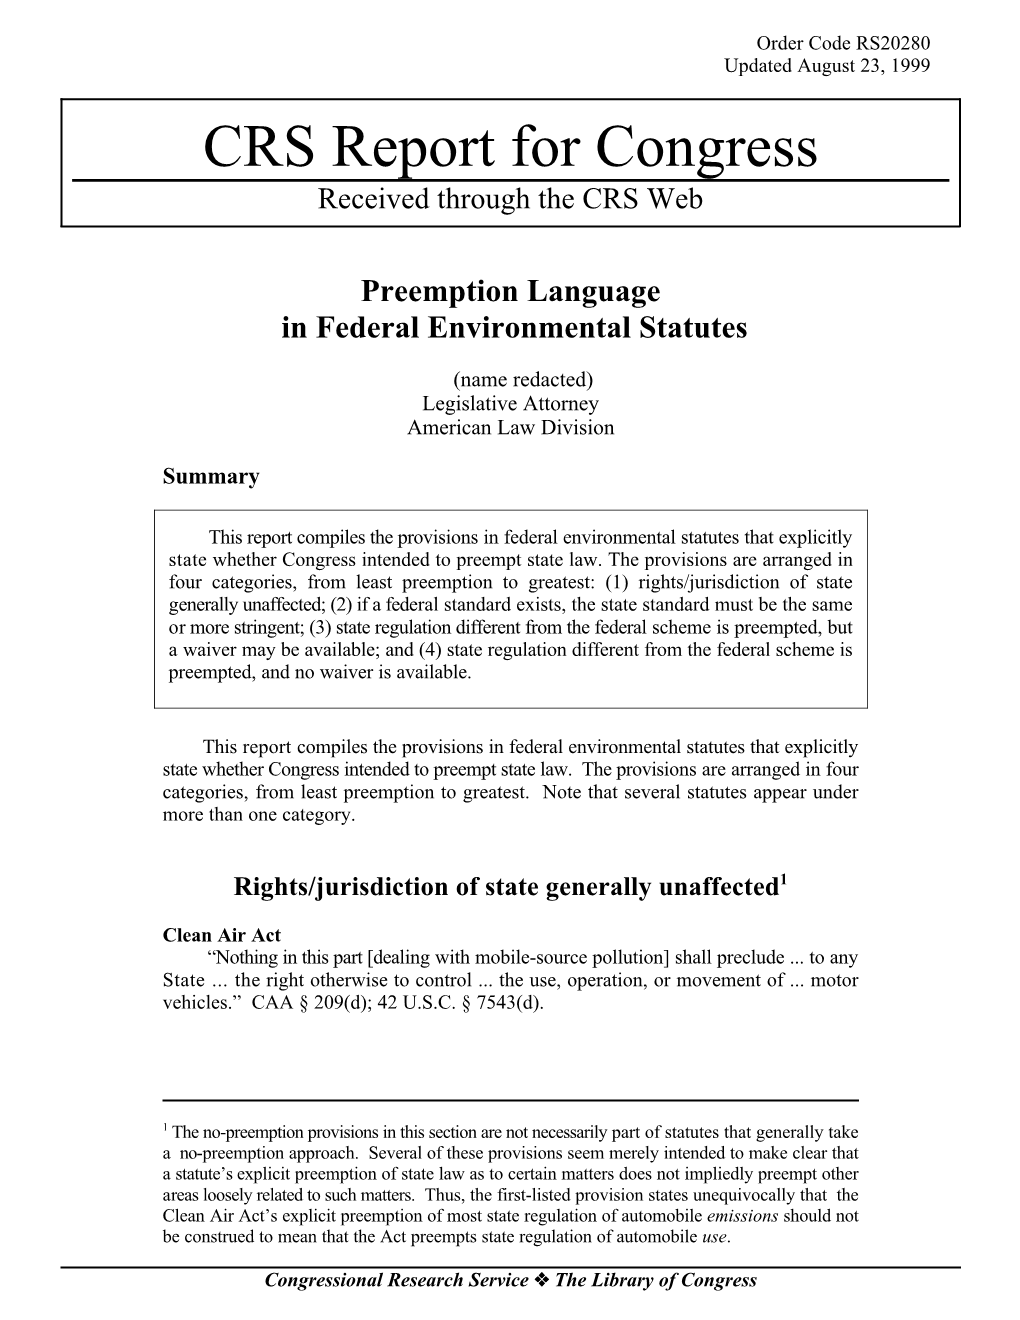 Preemption Language in Federal Environmental Statutes